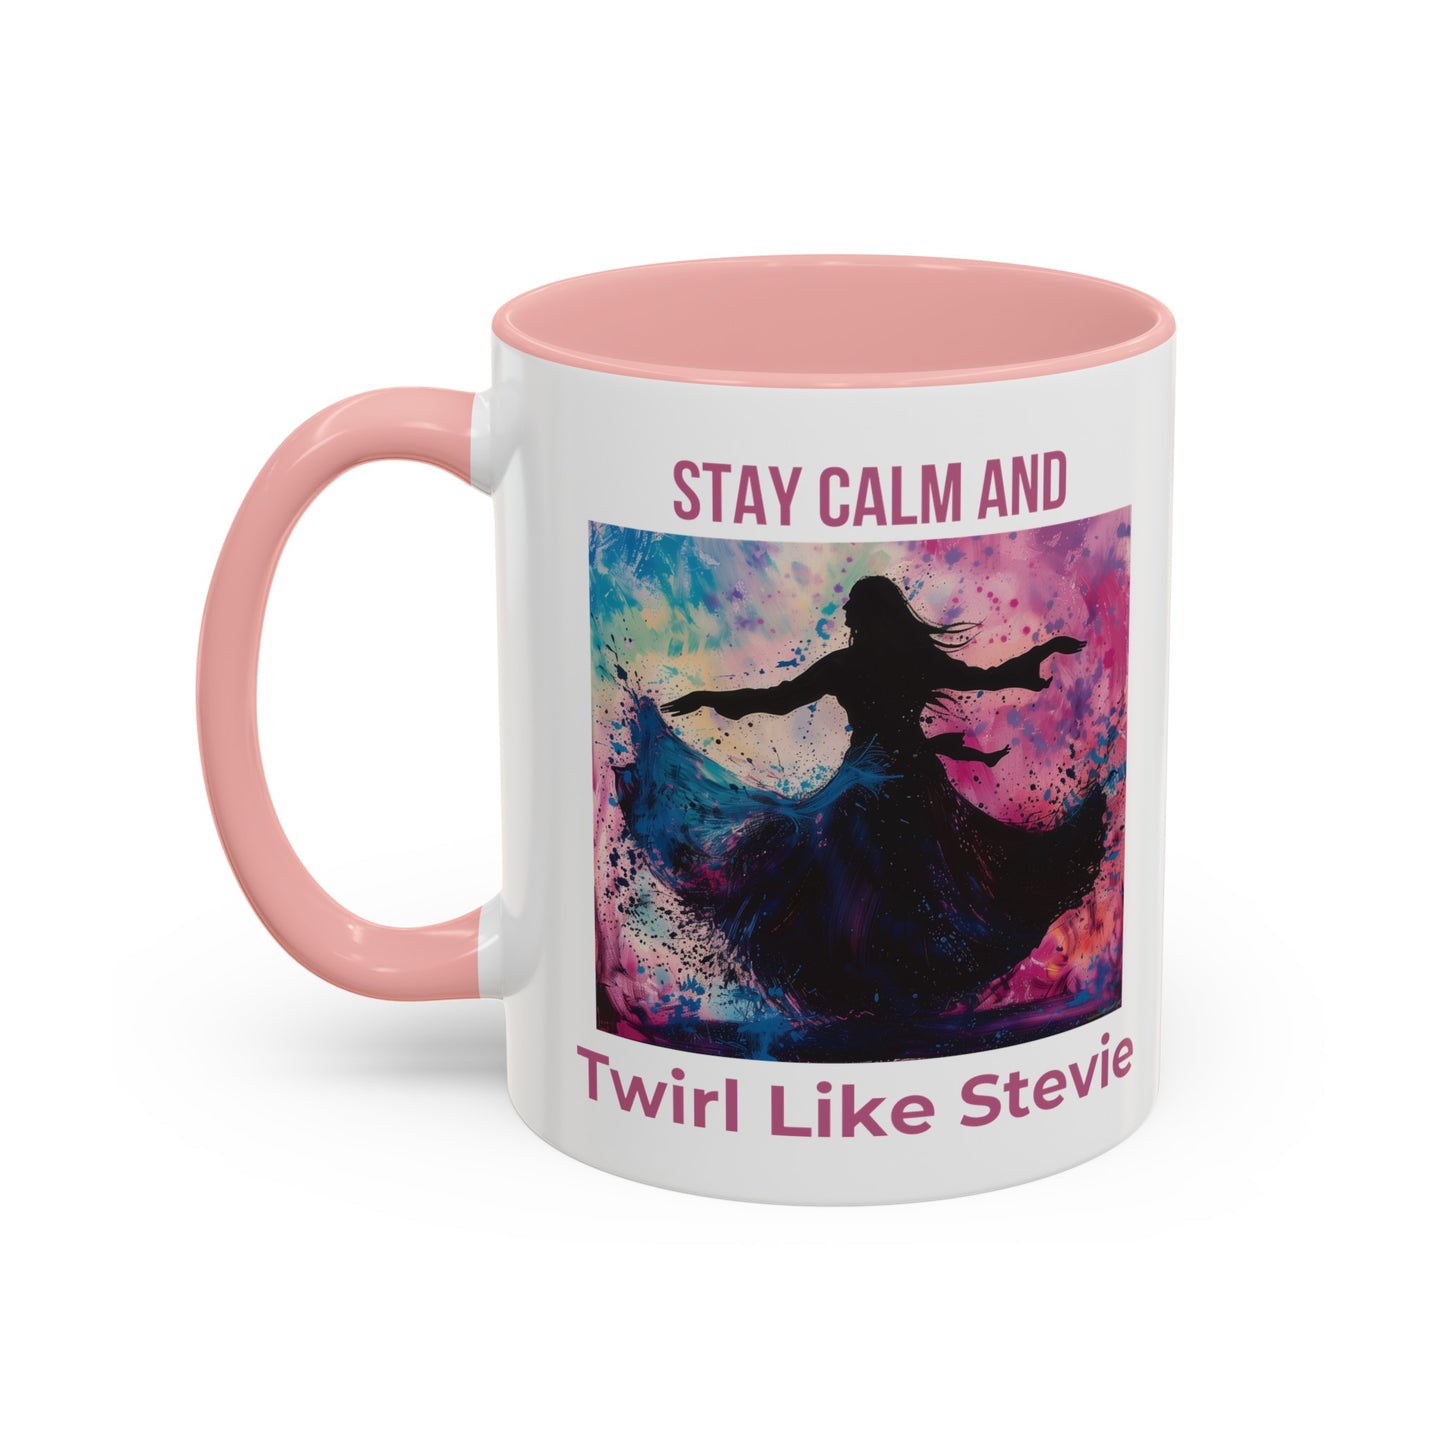 Stevie Coffee Mug, 11oz